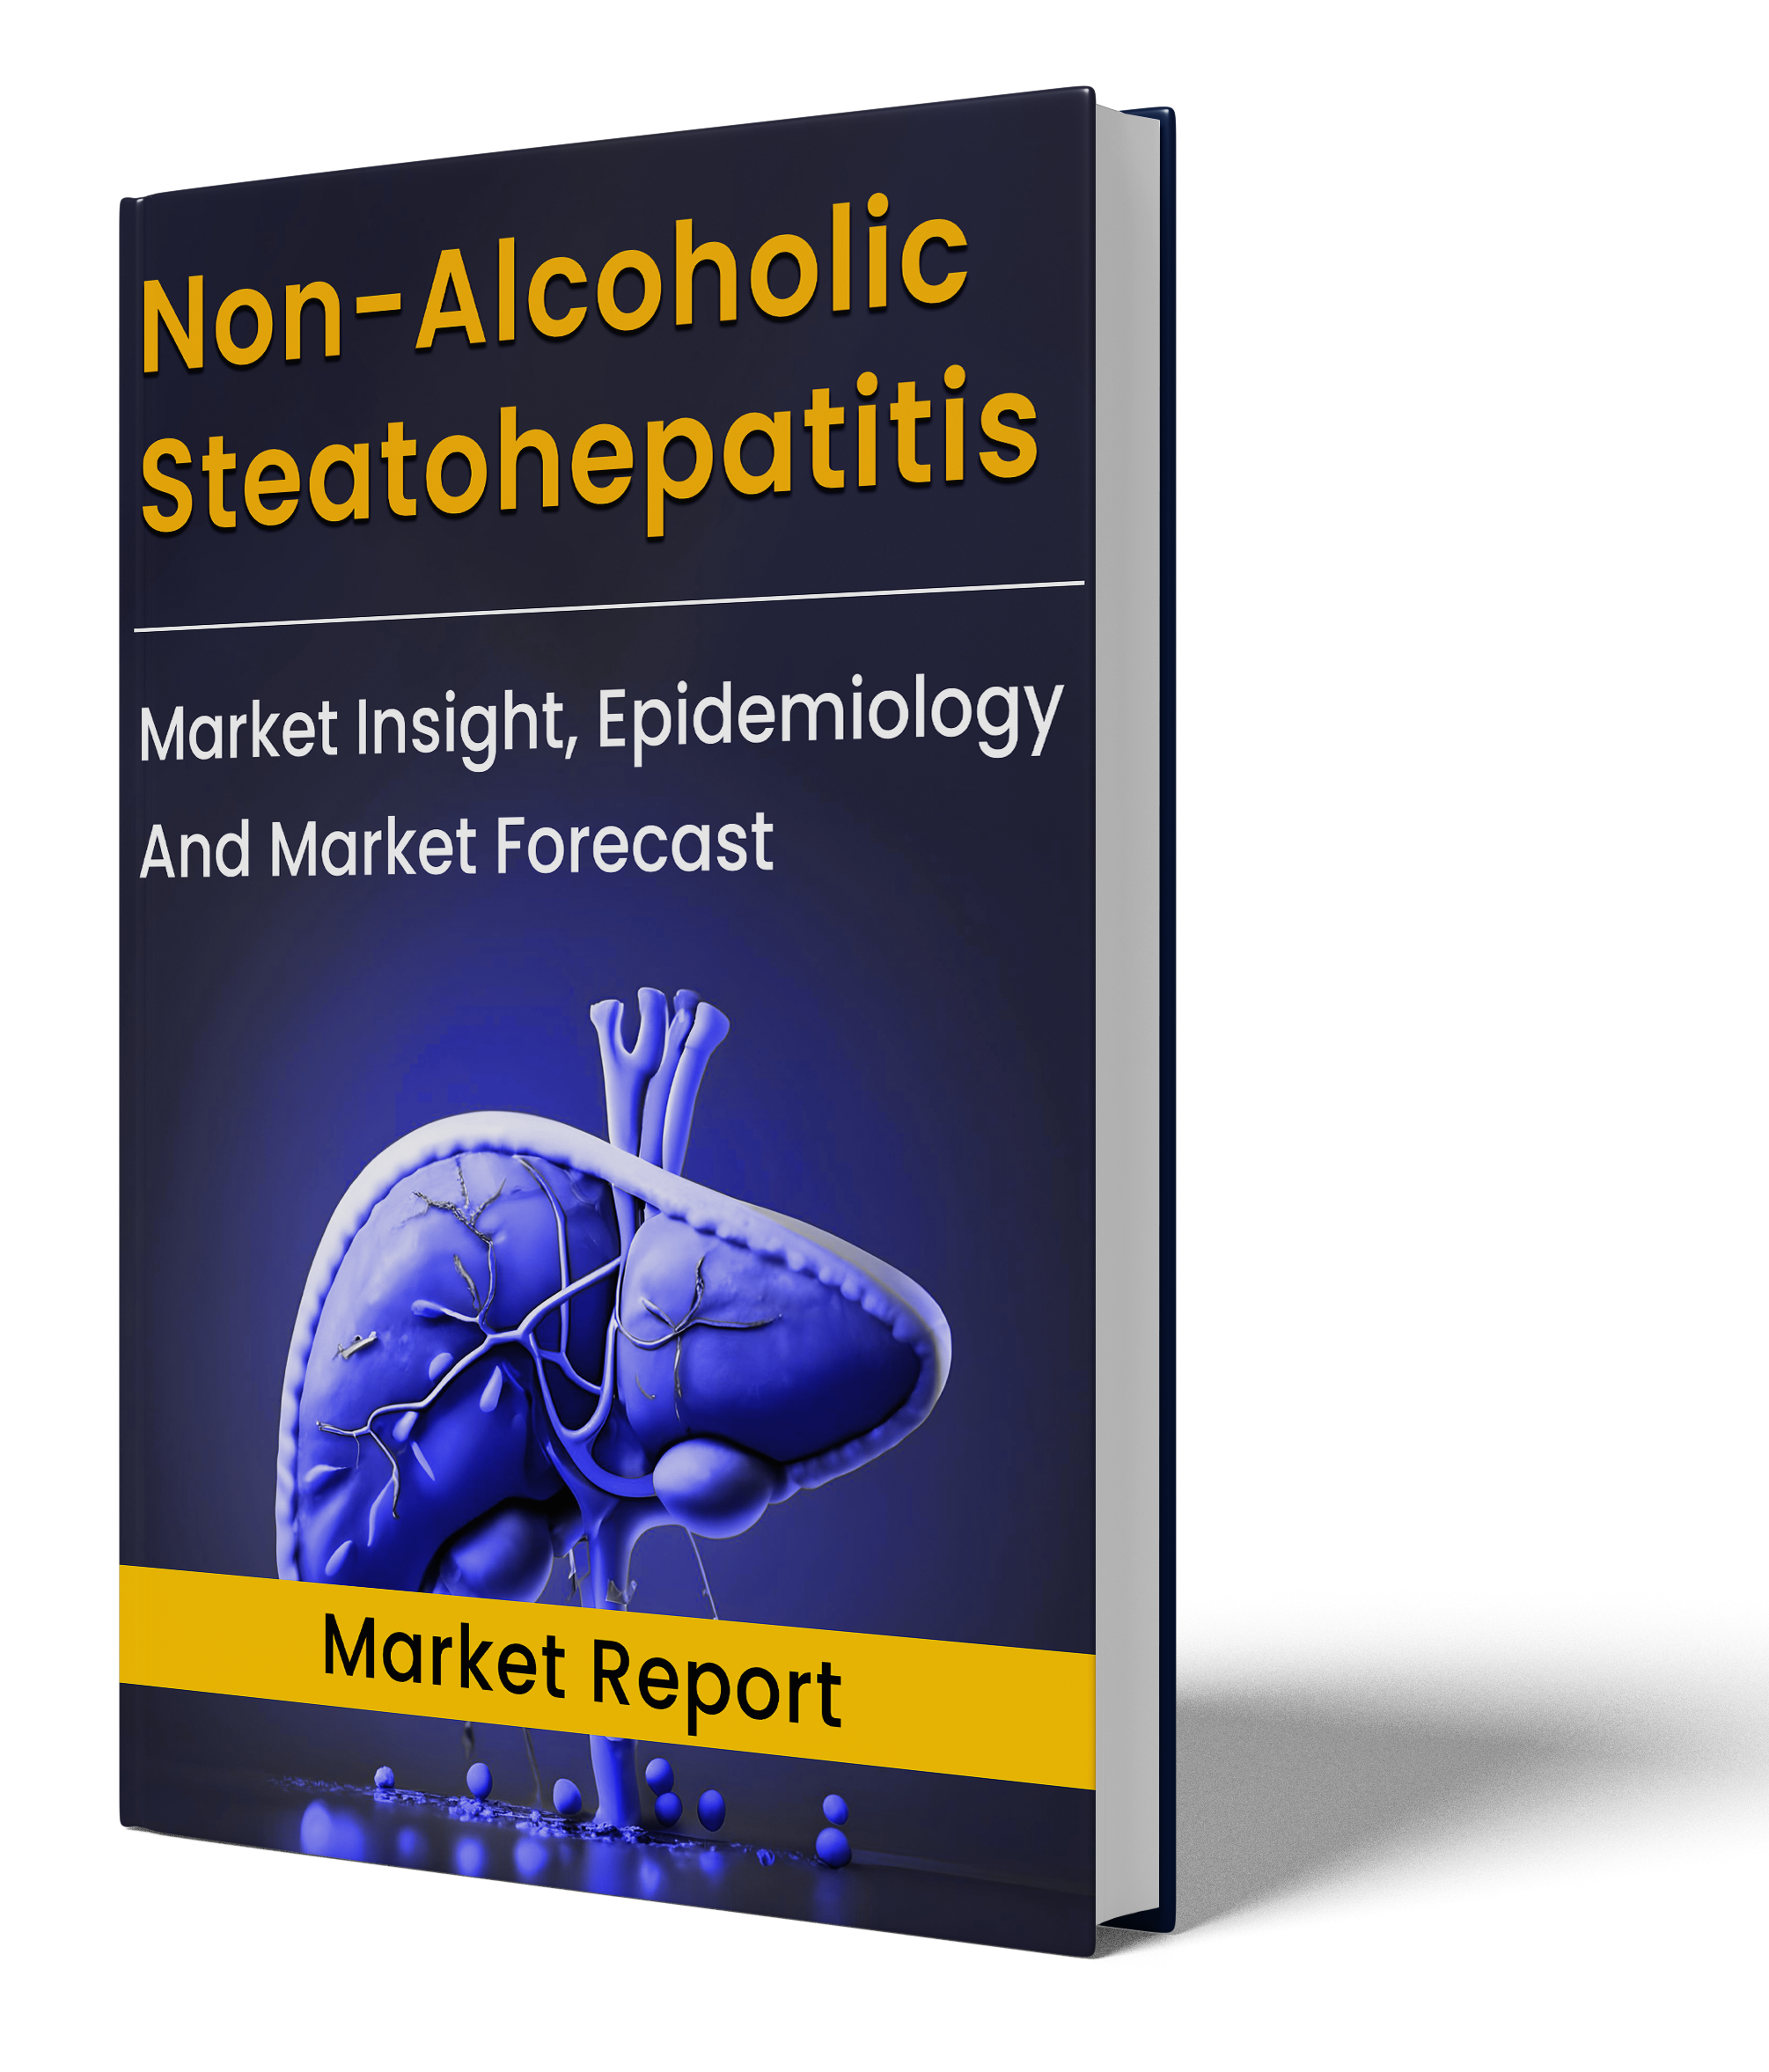 Non-Alcoholic Steatohepatitis Market Report